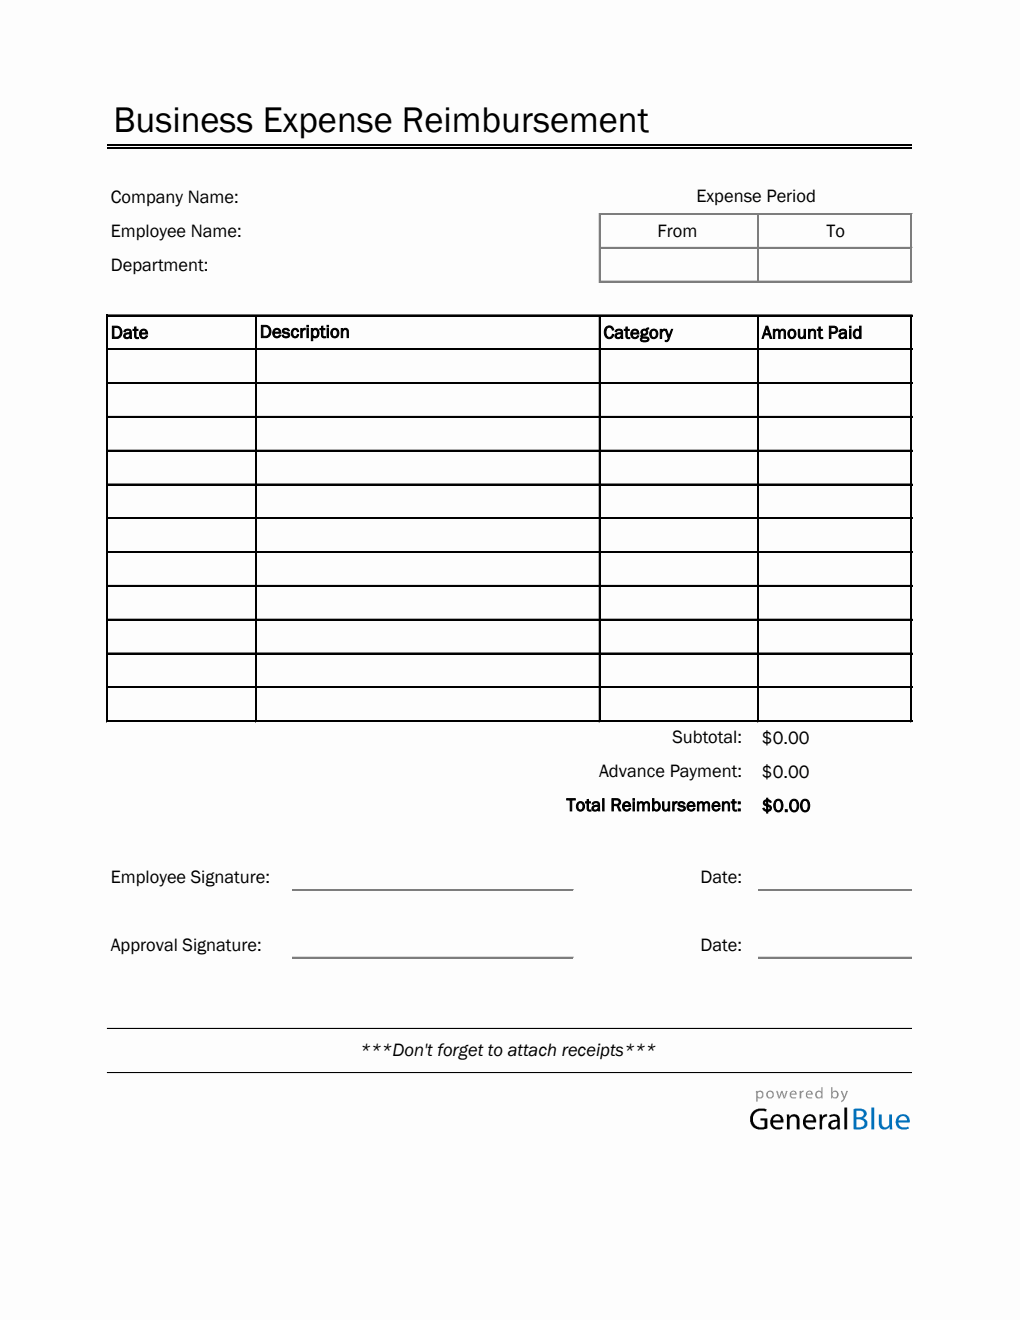 Business Expense Reimbursement in Excel (Printable)